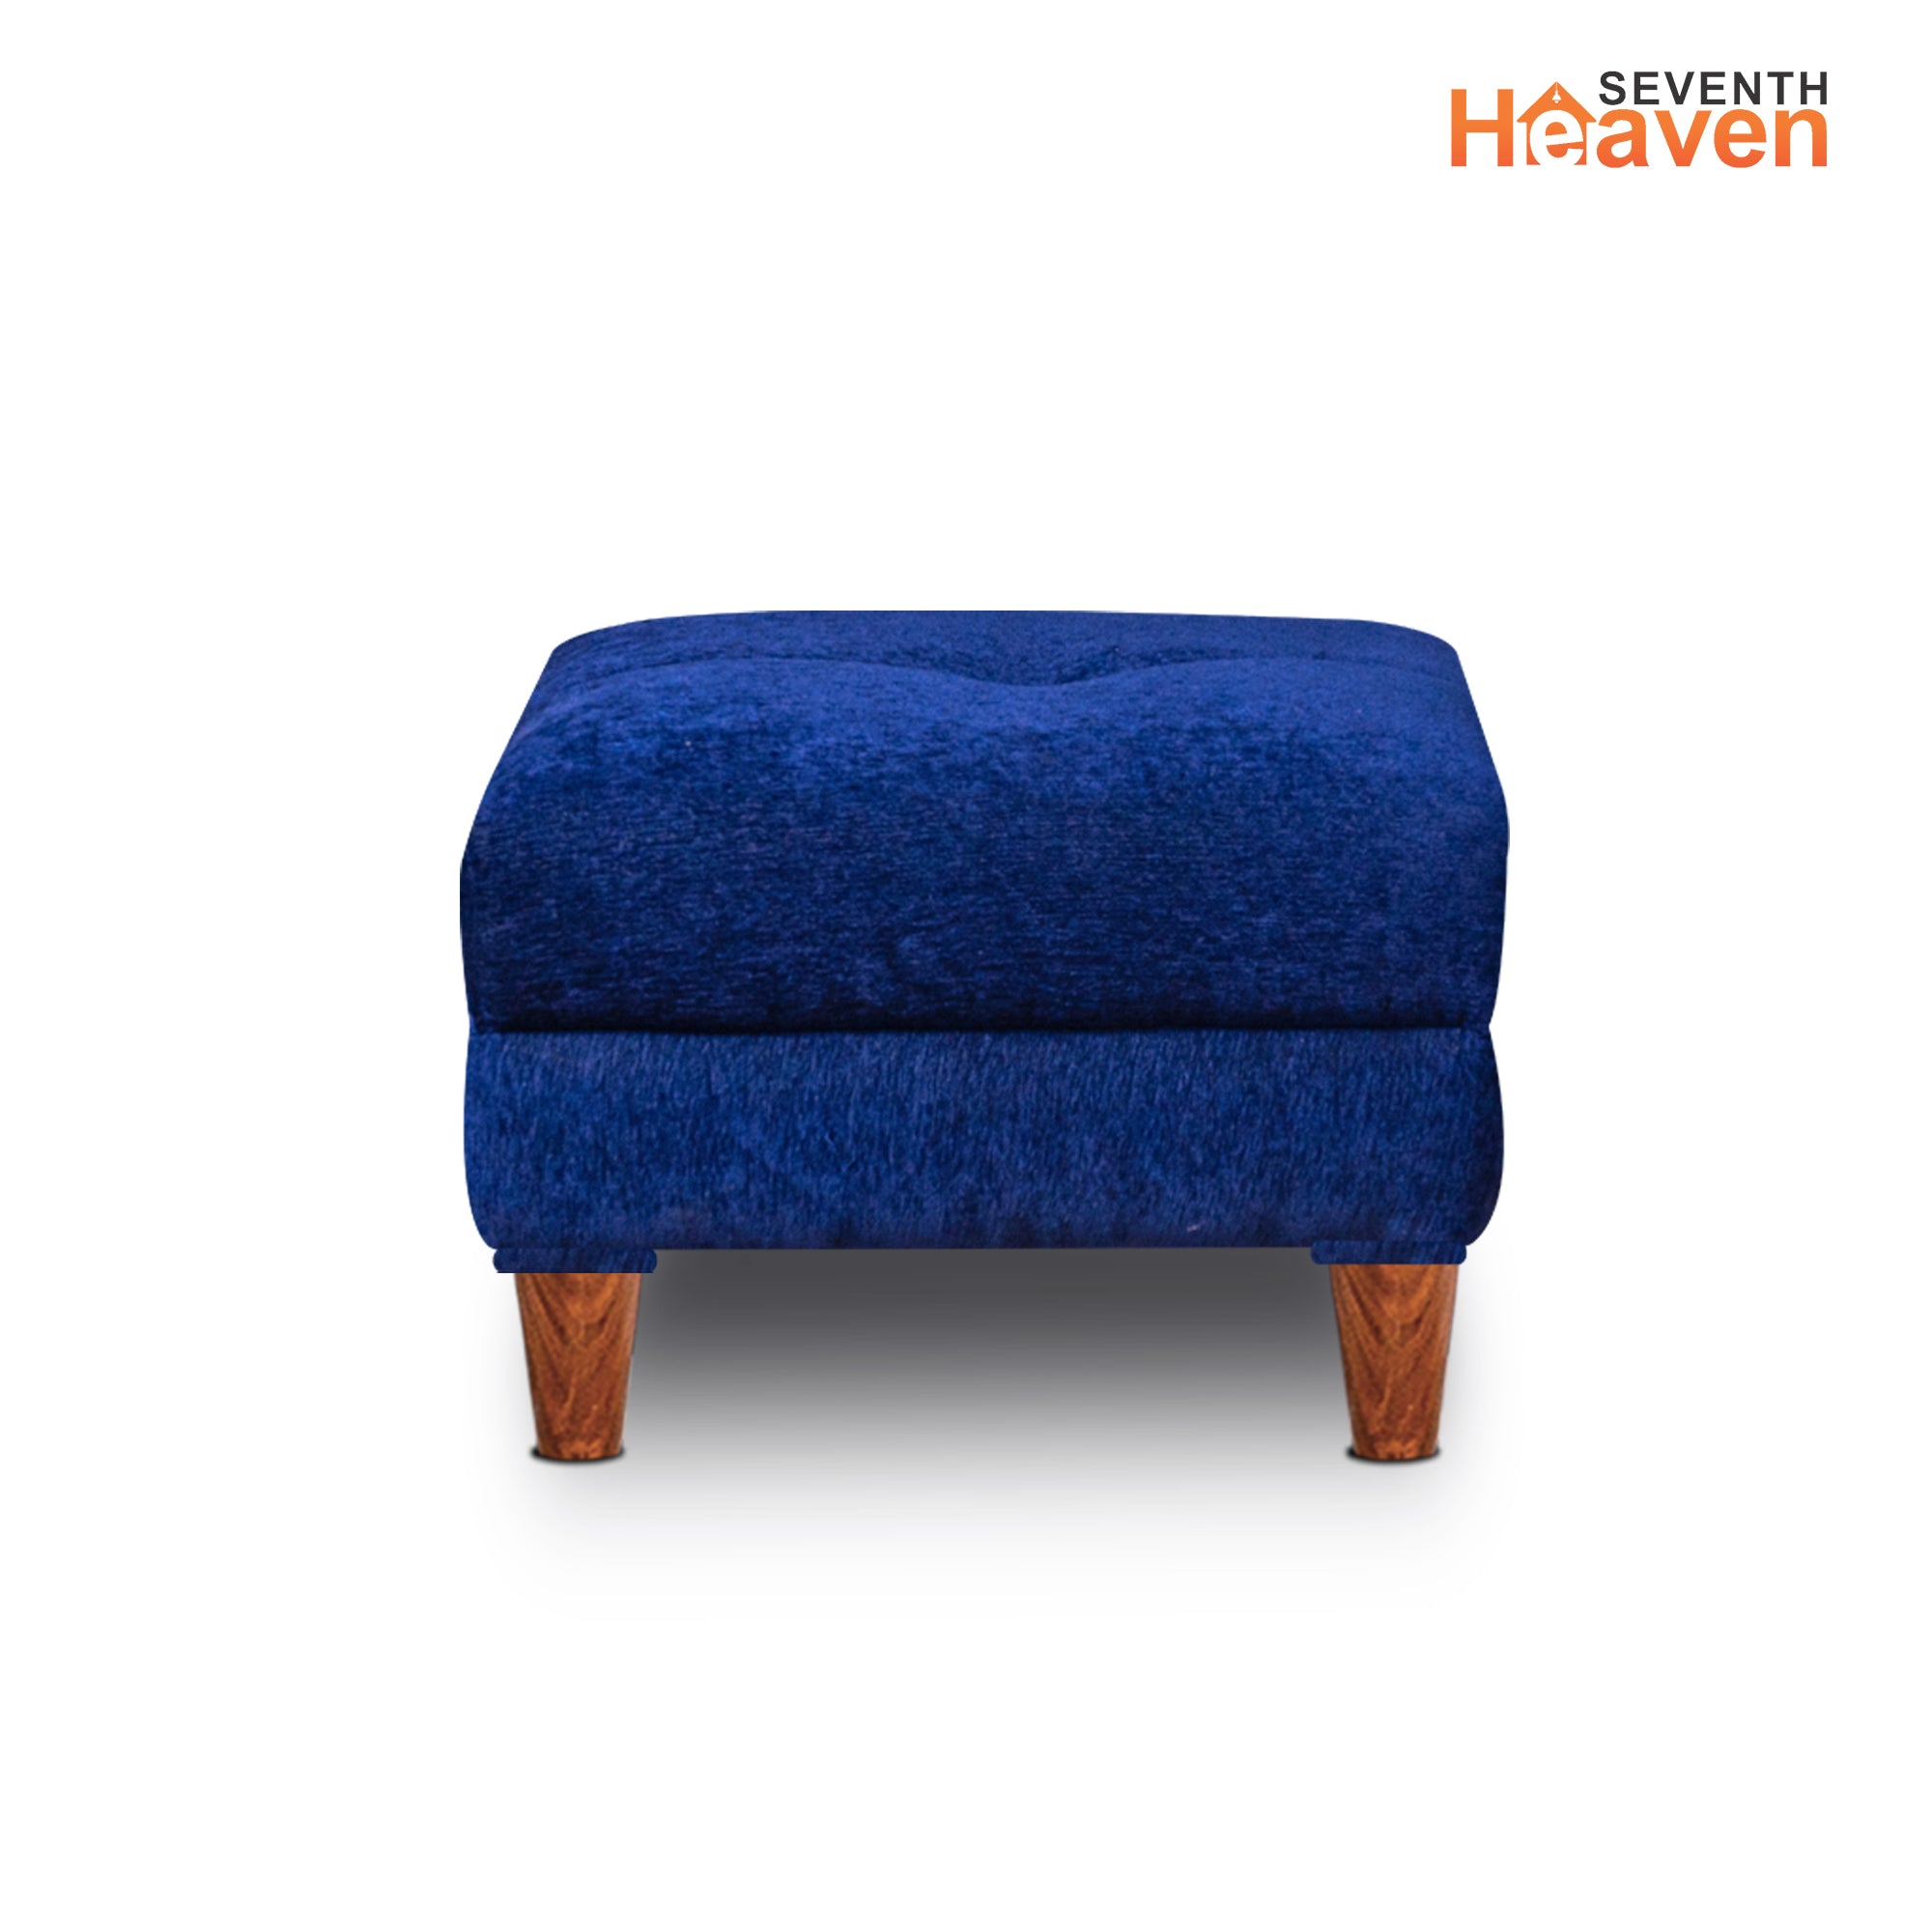 Seventh Heaven Milan 4 Seater Sofa with Ottoman, Chenille Molfino Fabric: 3 Year Warranty Fabric 4 Seater Sofa  (Finish Color - Dark blue, DIY(Do-It-Yourself))